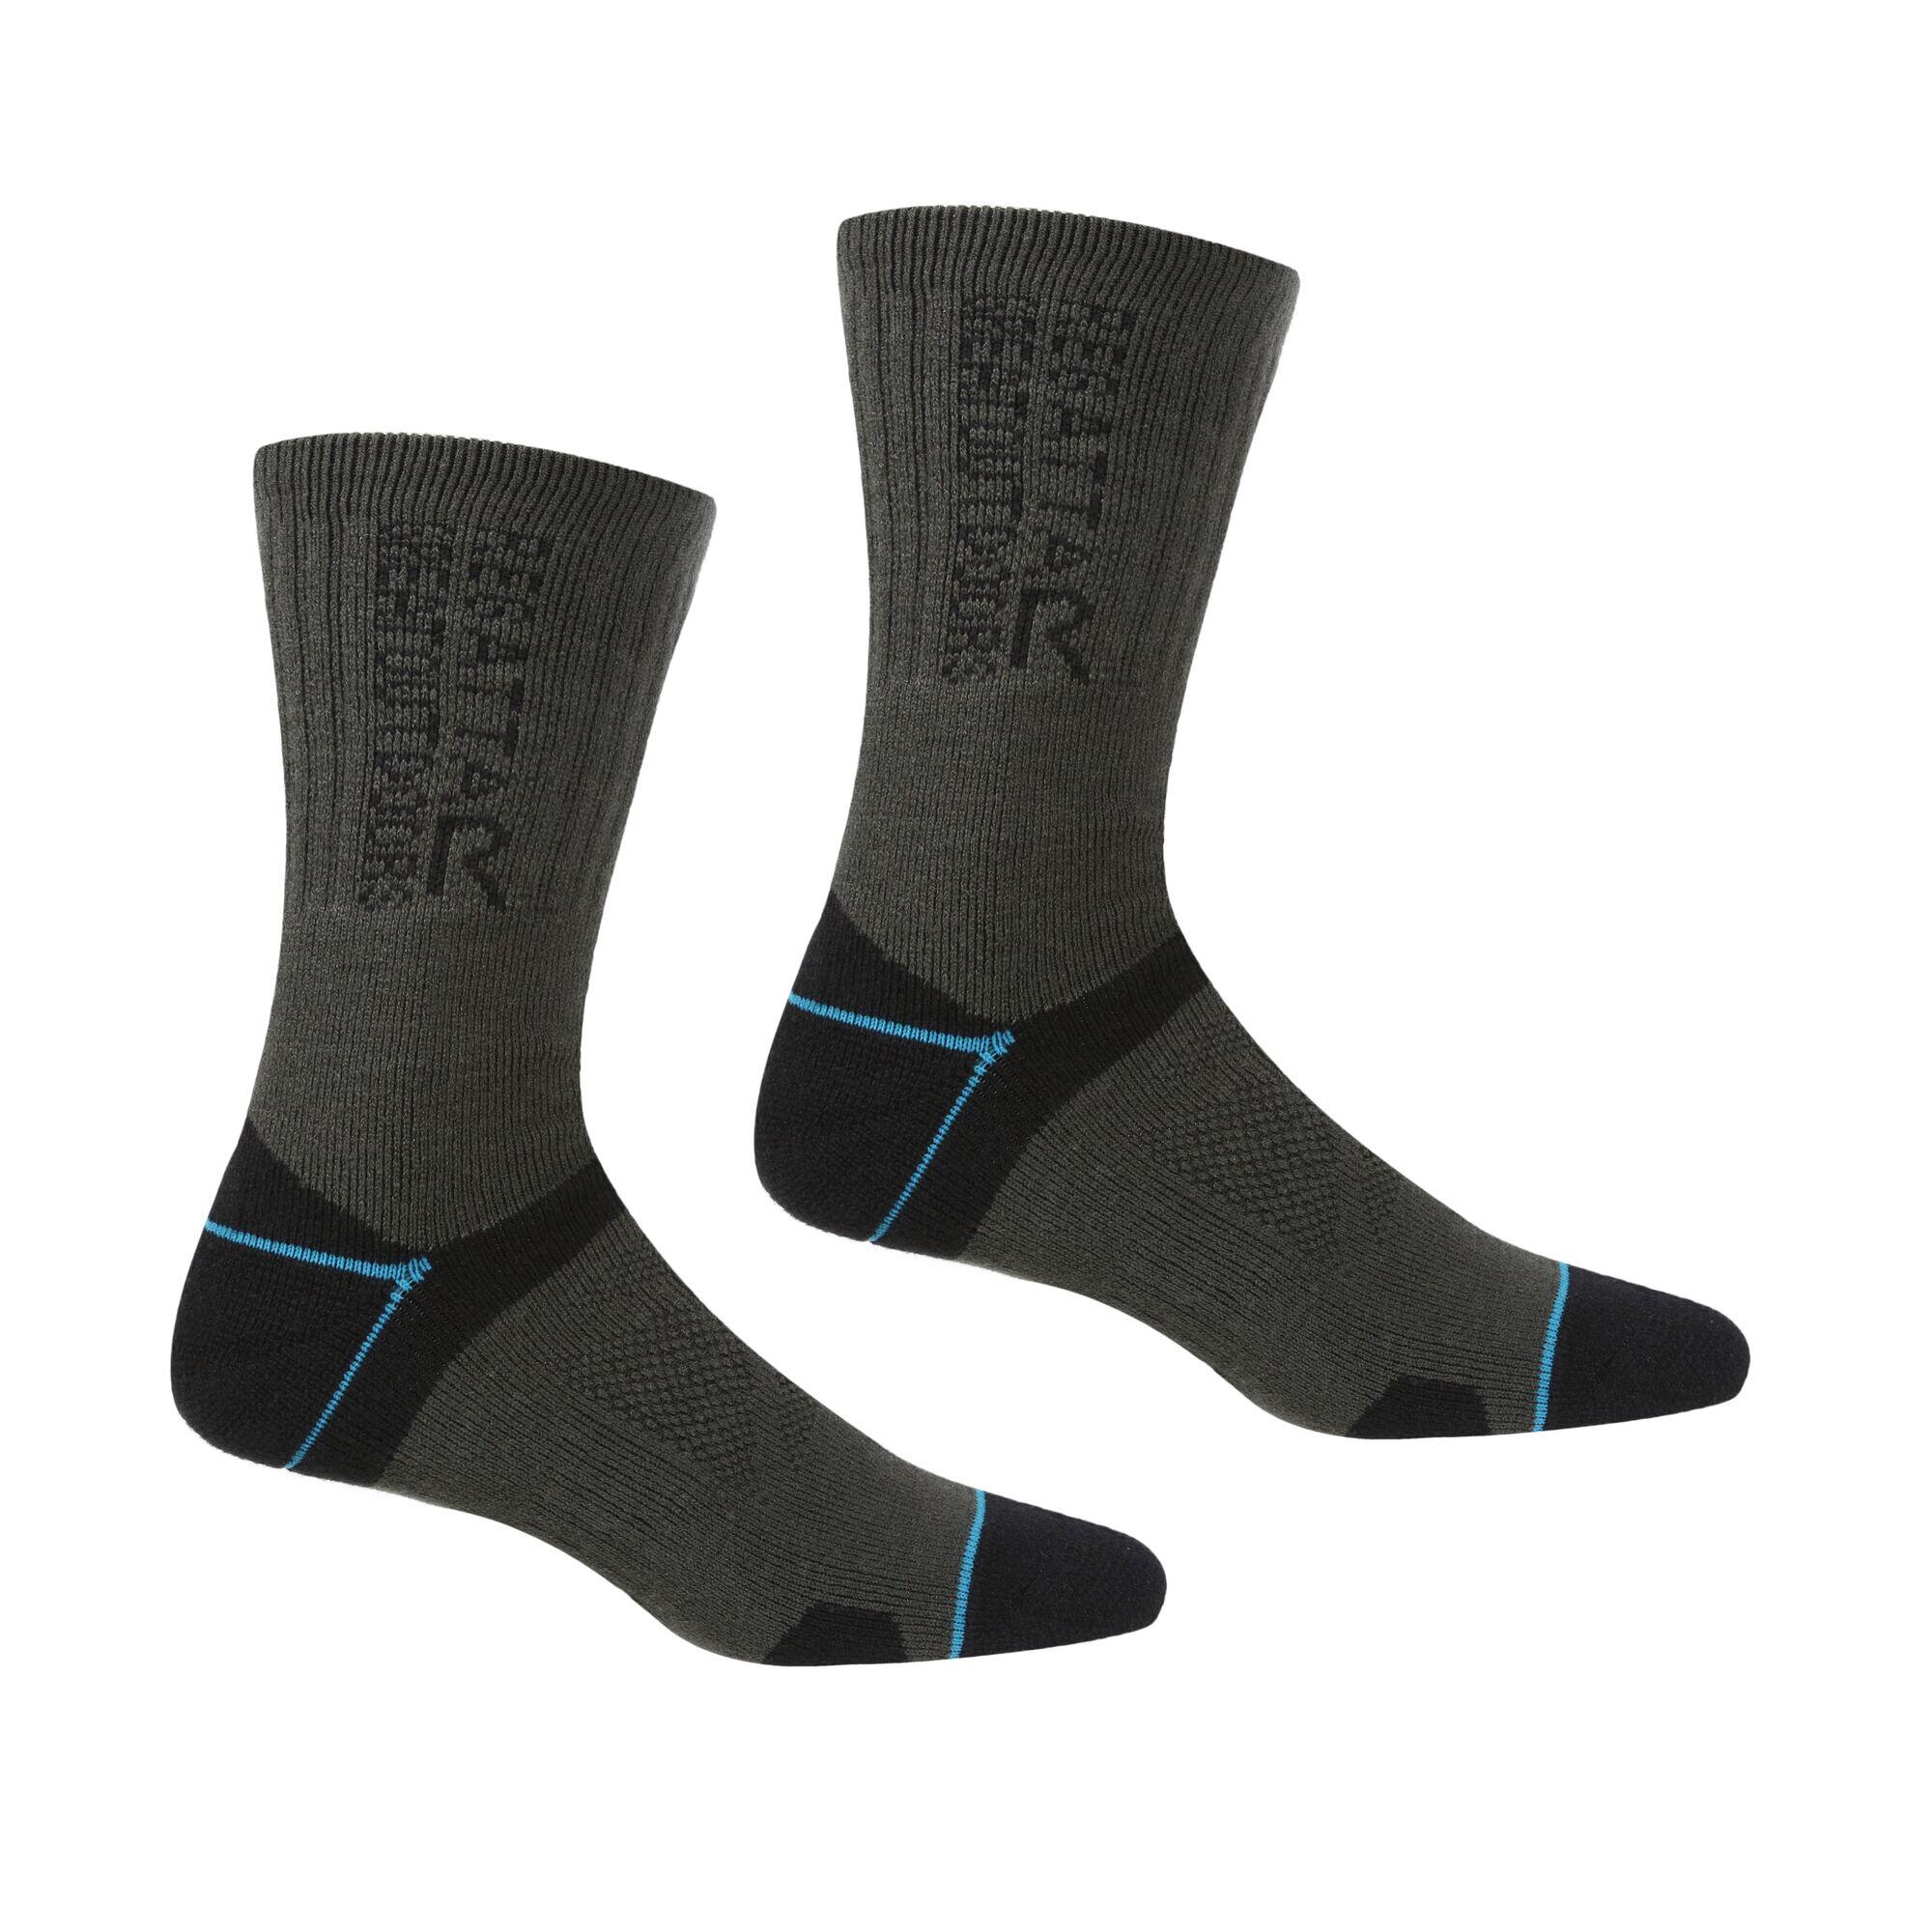 REGATTA Blister Protection II Women's Walking Two-Pair Socks - Black Ash Grey Marl